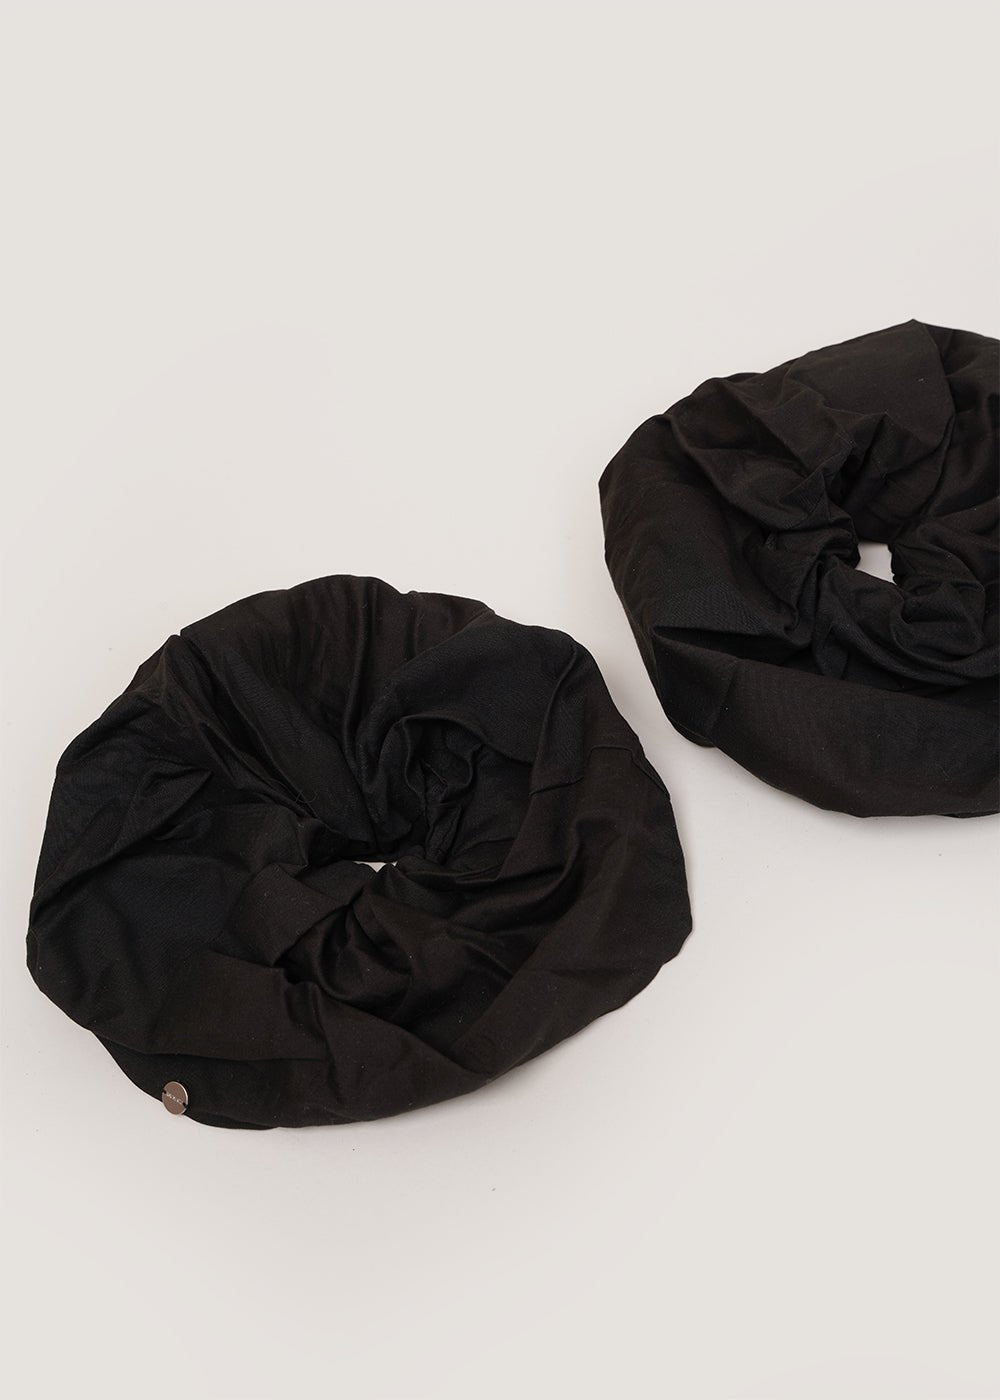 AMOMENTO Black Sheer Cotton Scrunchies - New Classics Studios Sustainable Ethical Fashion Canada